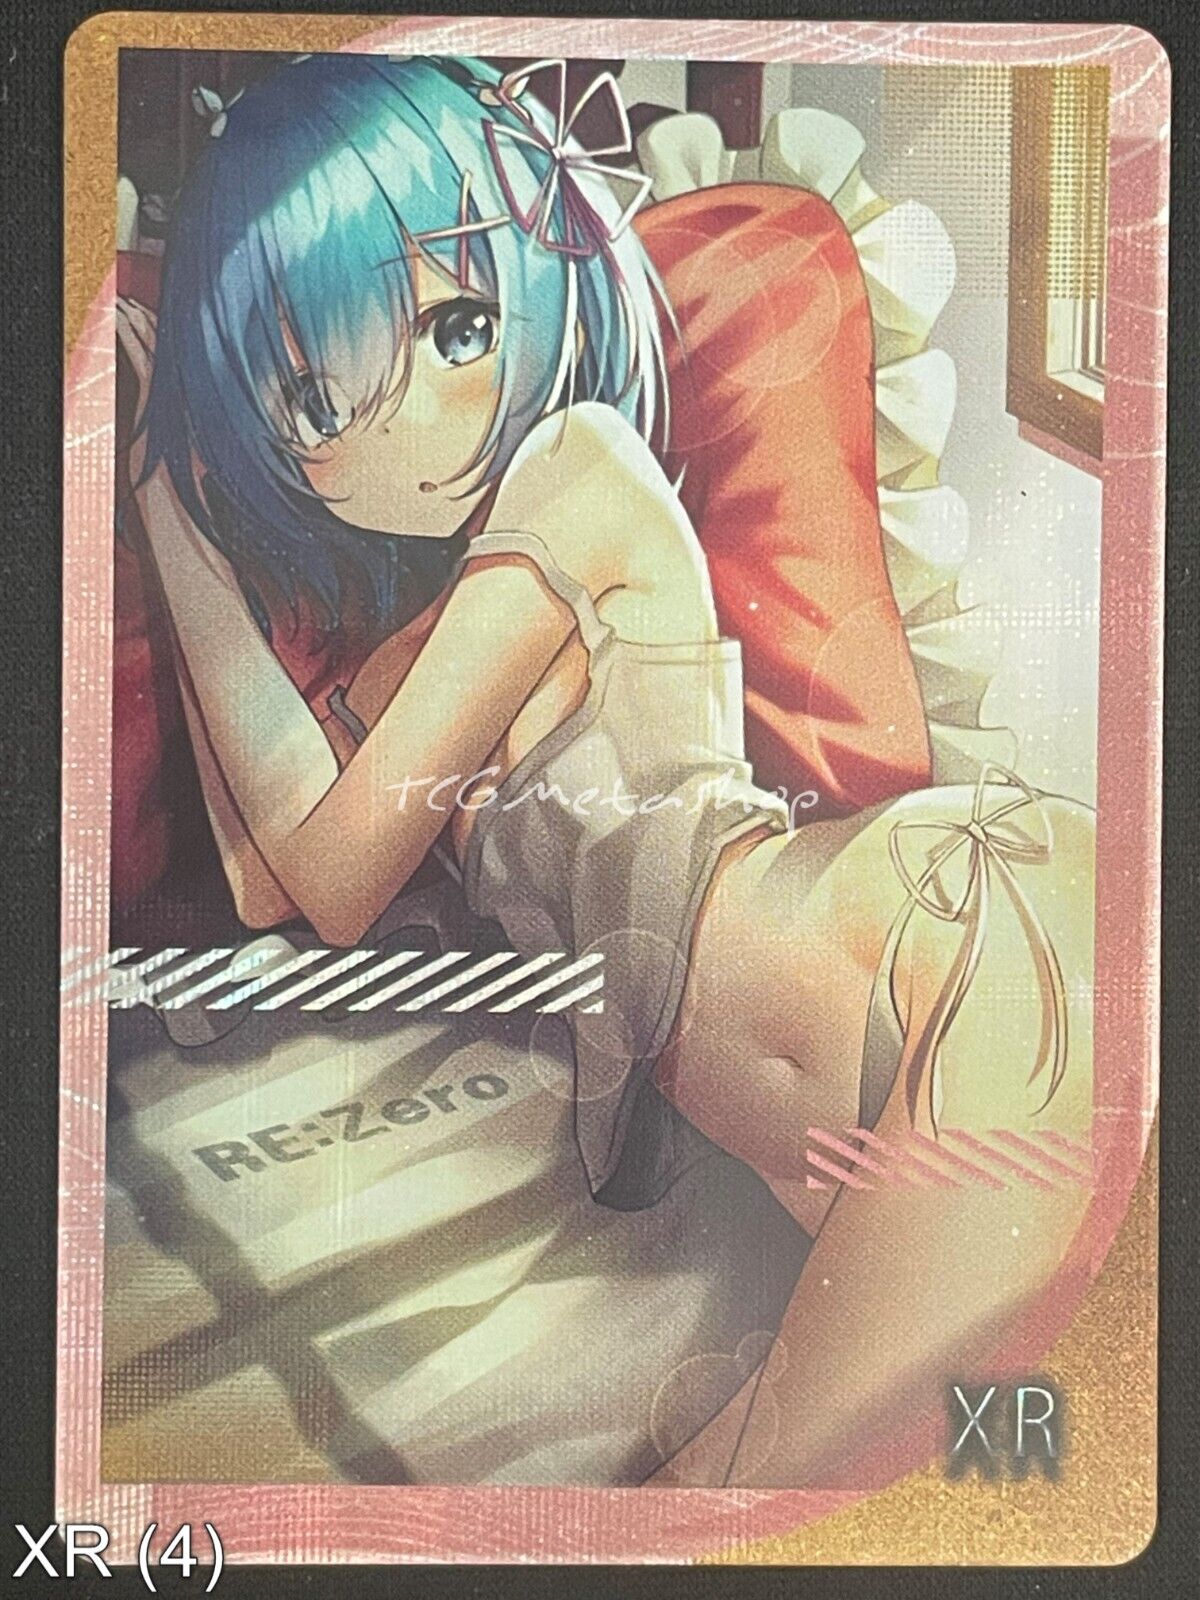 🔥 Rem Re:Zero Suck Goddess Story Anime Waifu Card XR 4 🔥